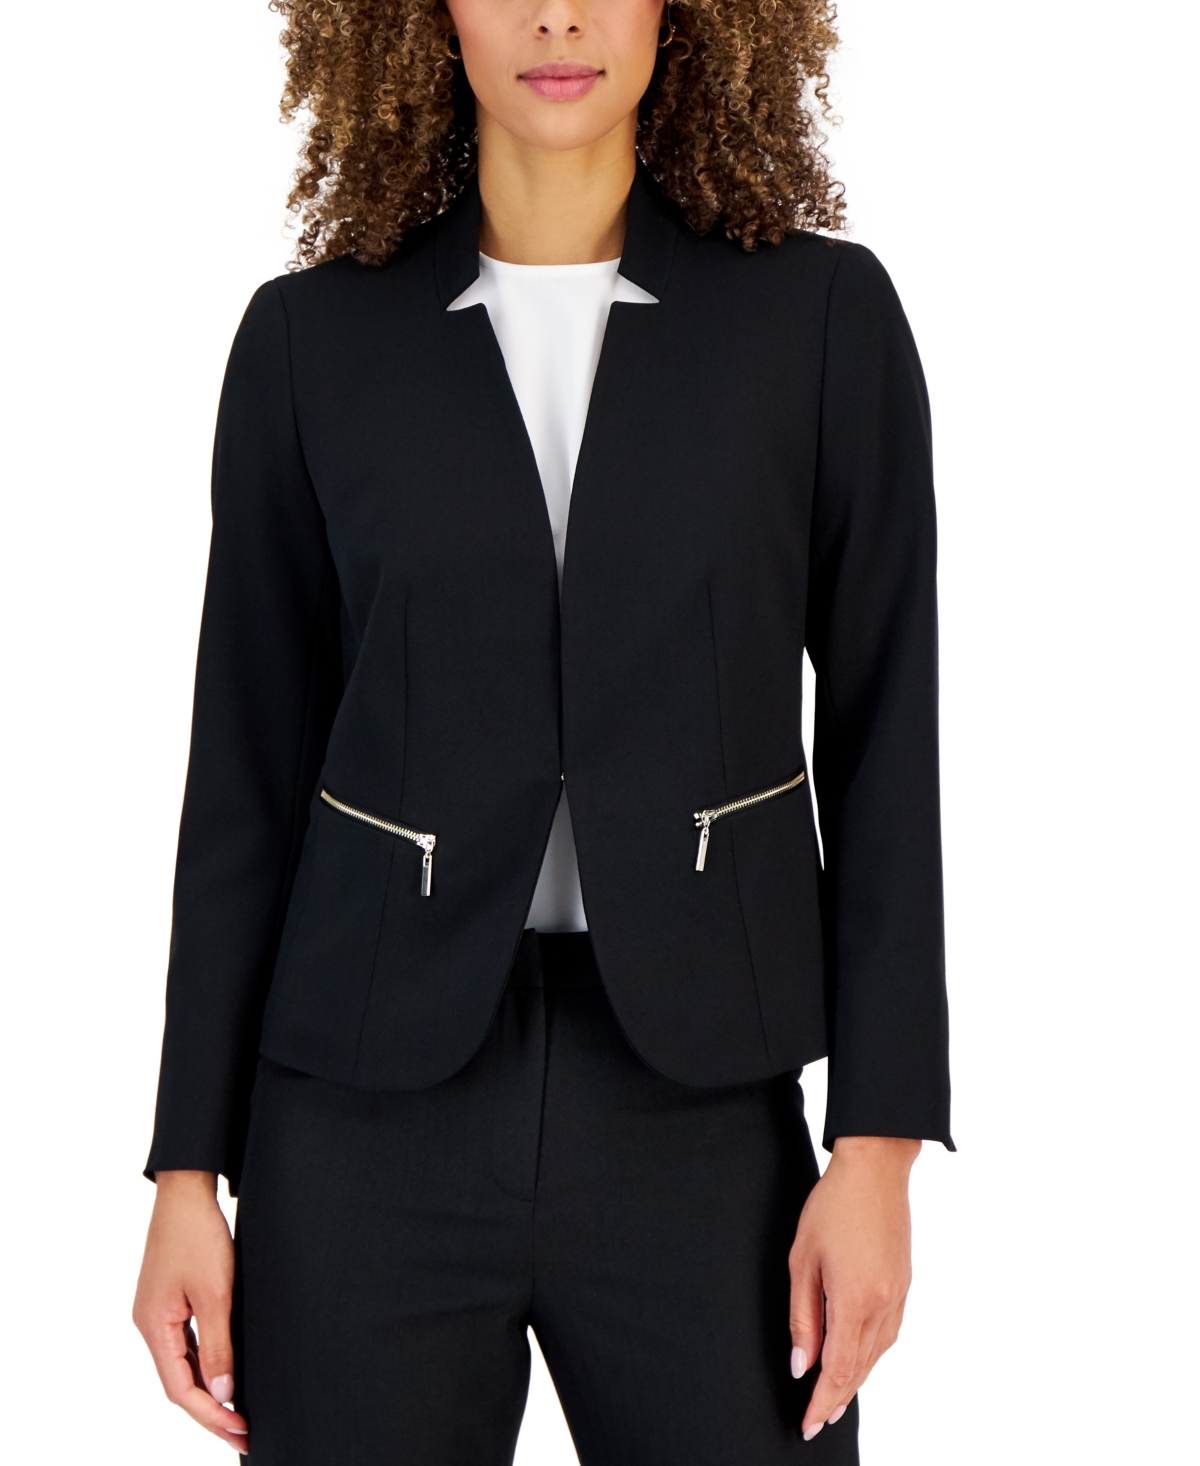 Kasper Women's Size Two Button Jacket, Grey/Black, 12 Petite at